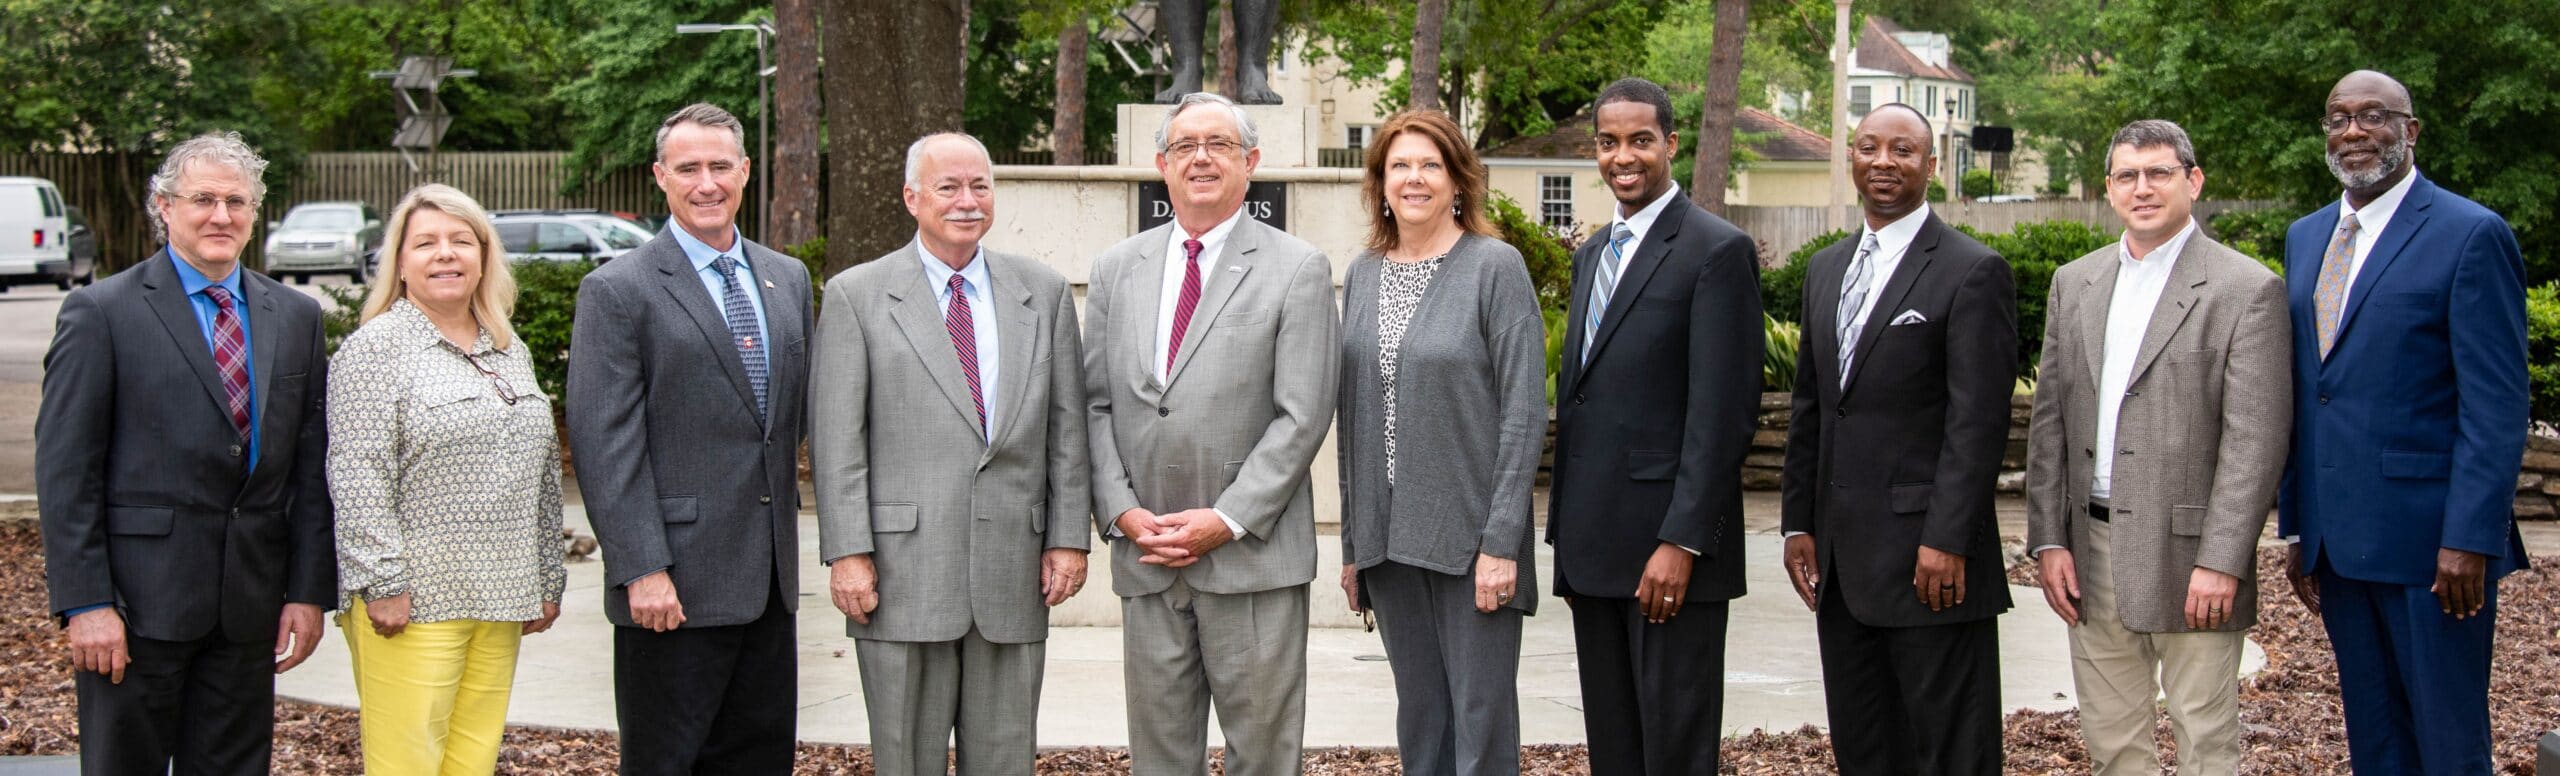 Alabama SBDC Advisory Board